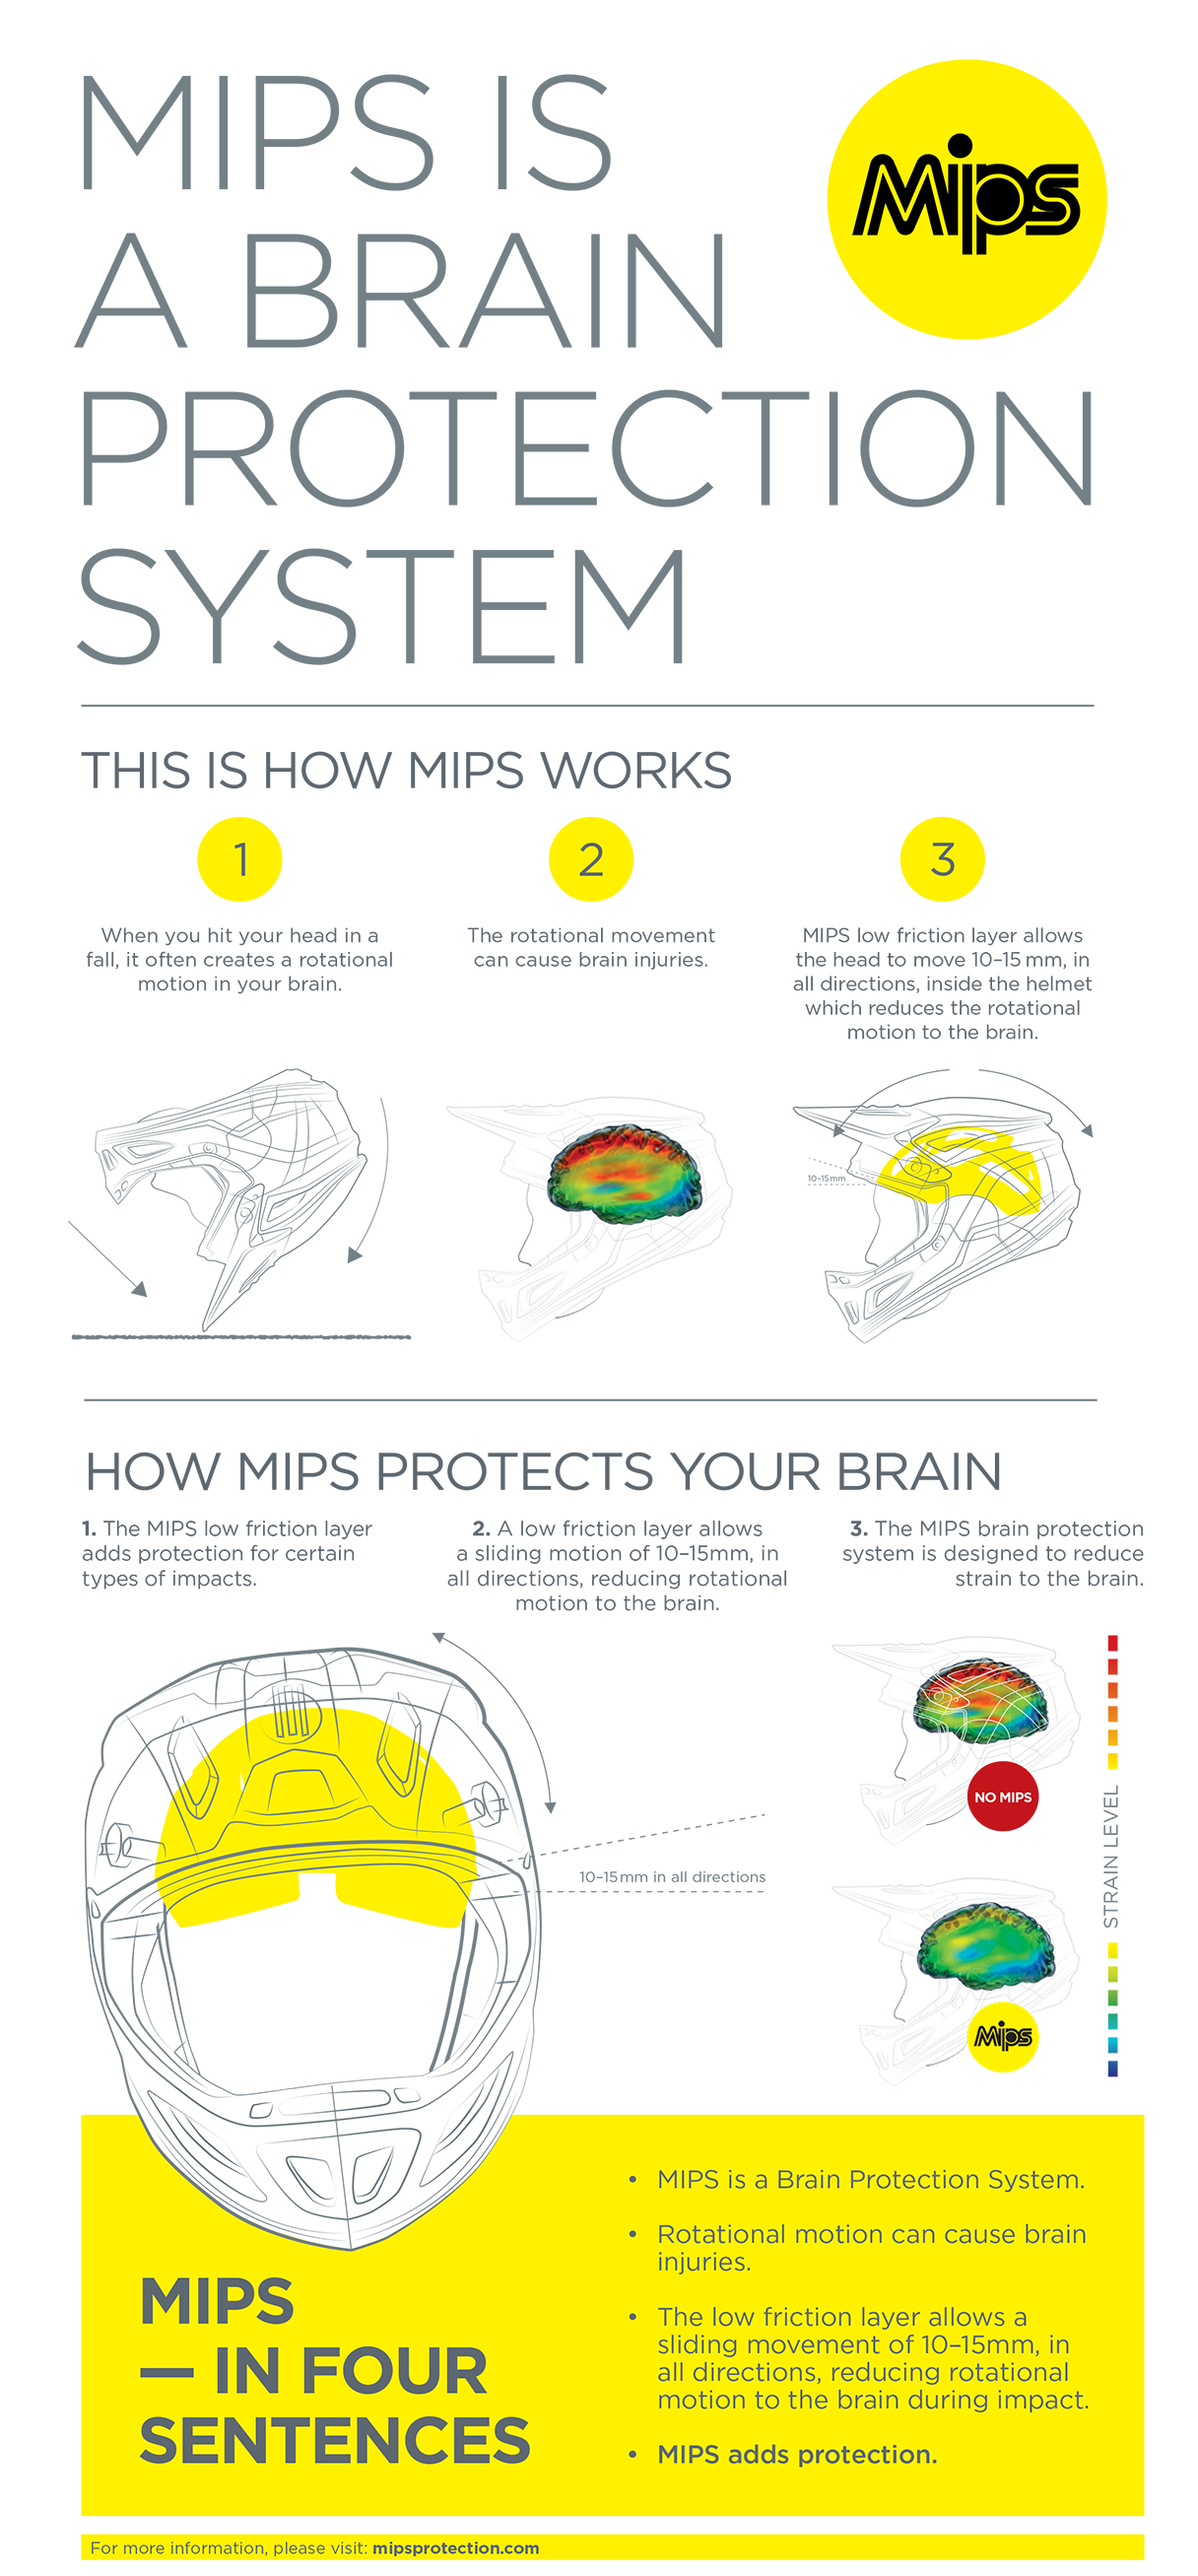 ALPINESTARS Supertech M8 Helmet - Echo - MIPS® - Black/Blue/Yellow/Pink - XL 8302621-1759-XL